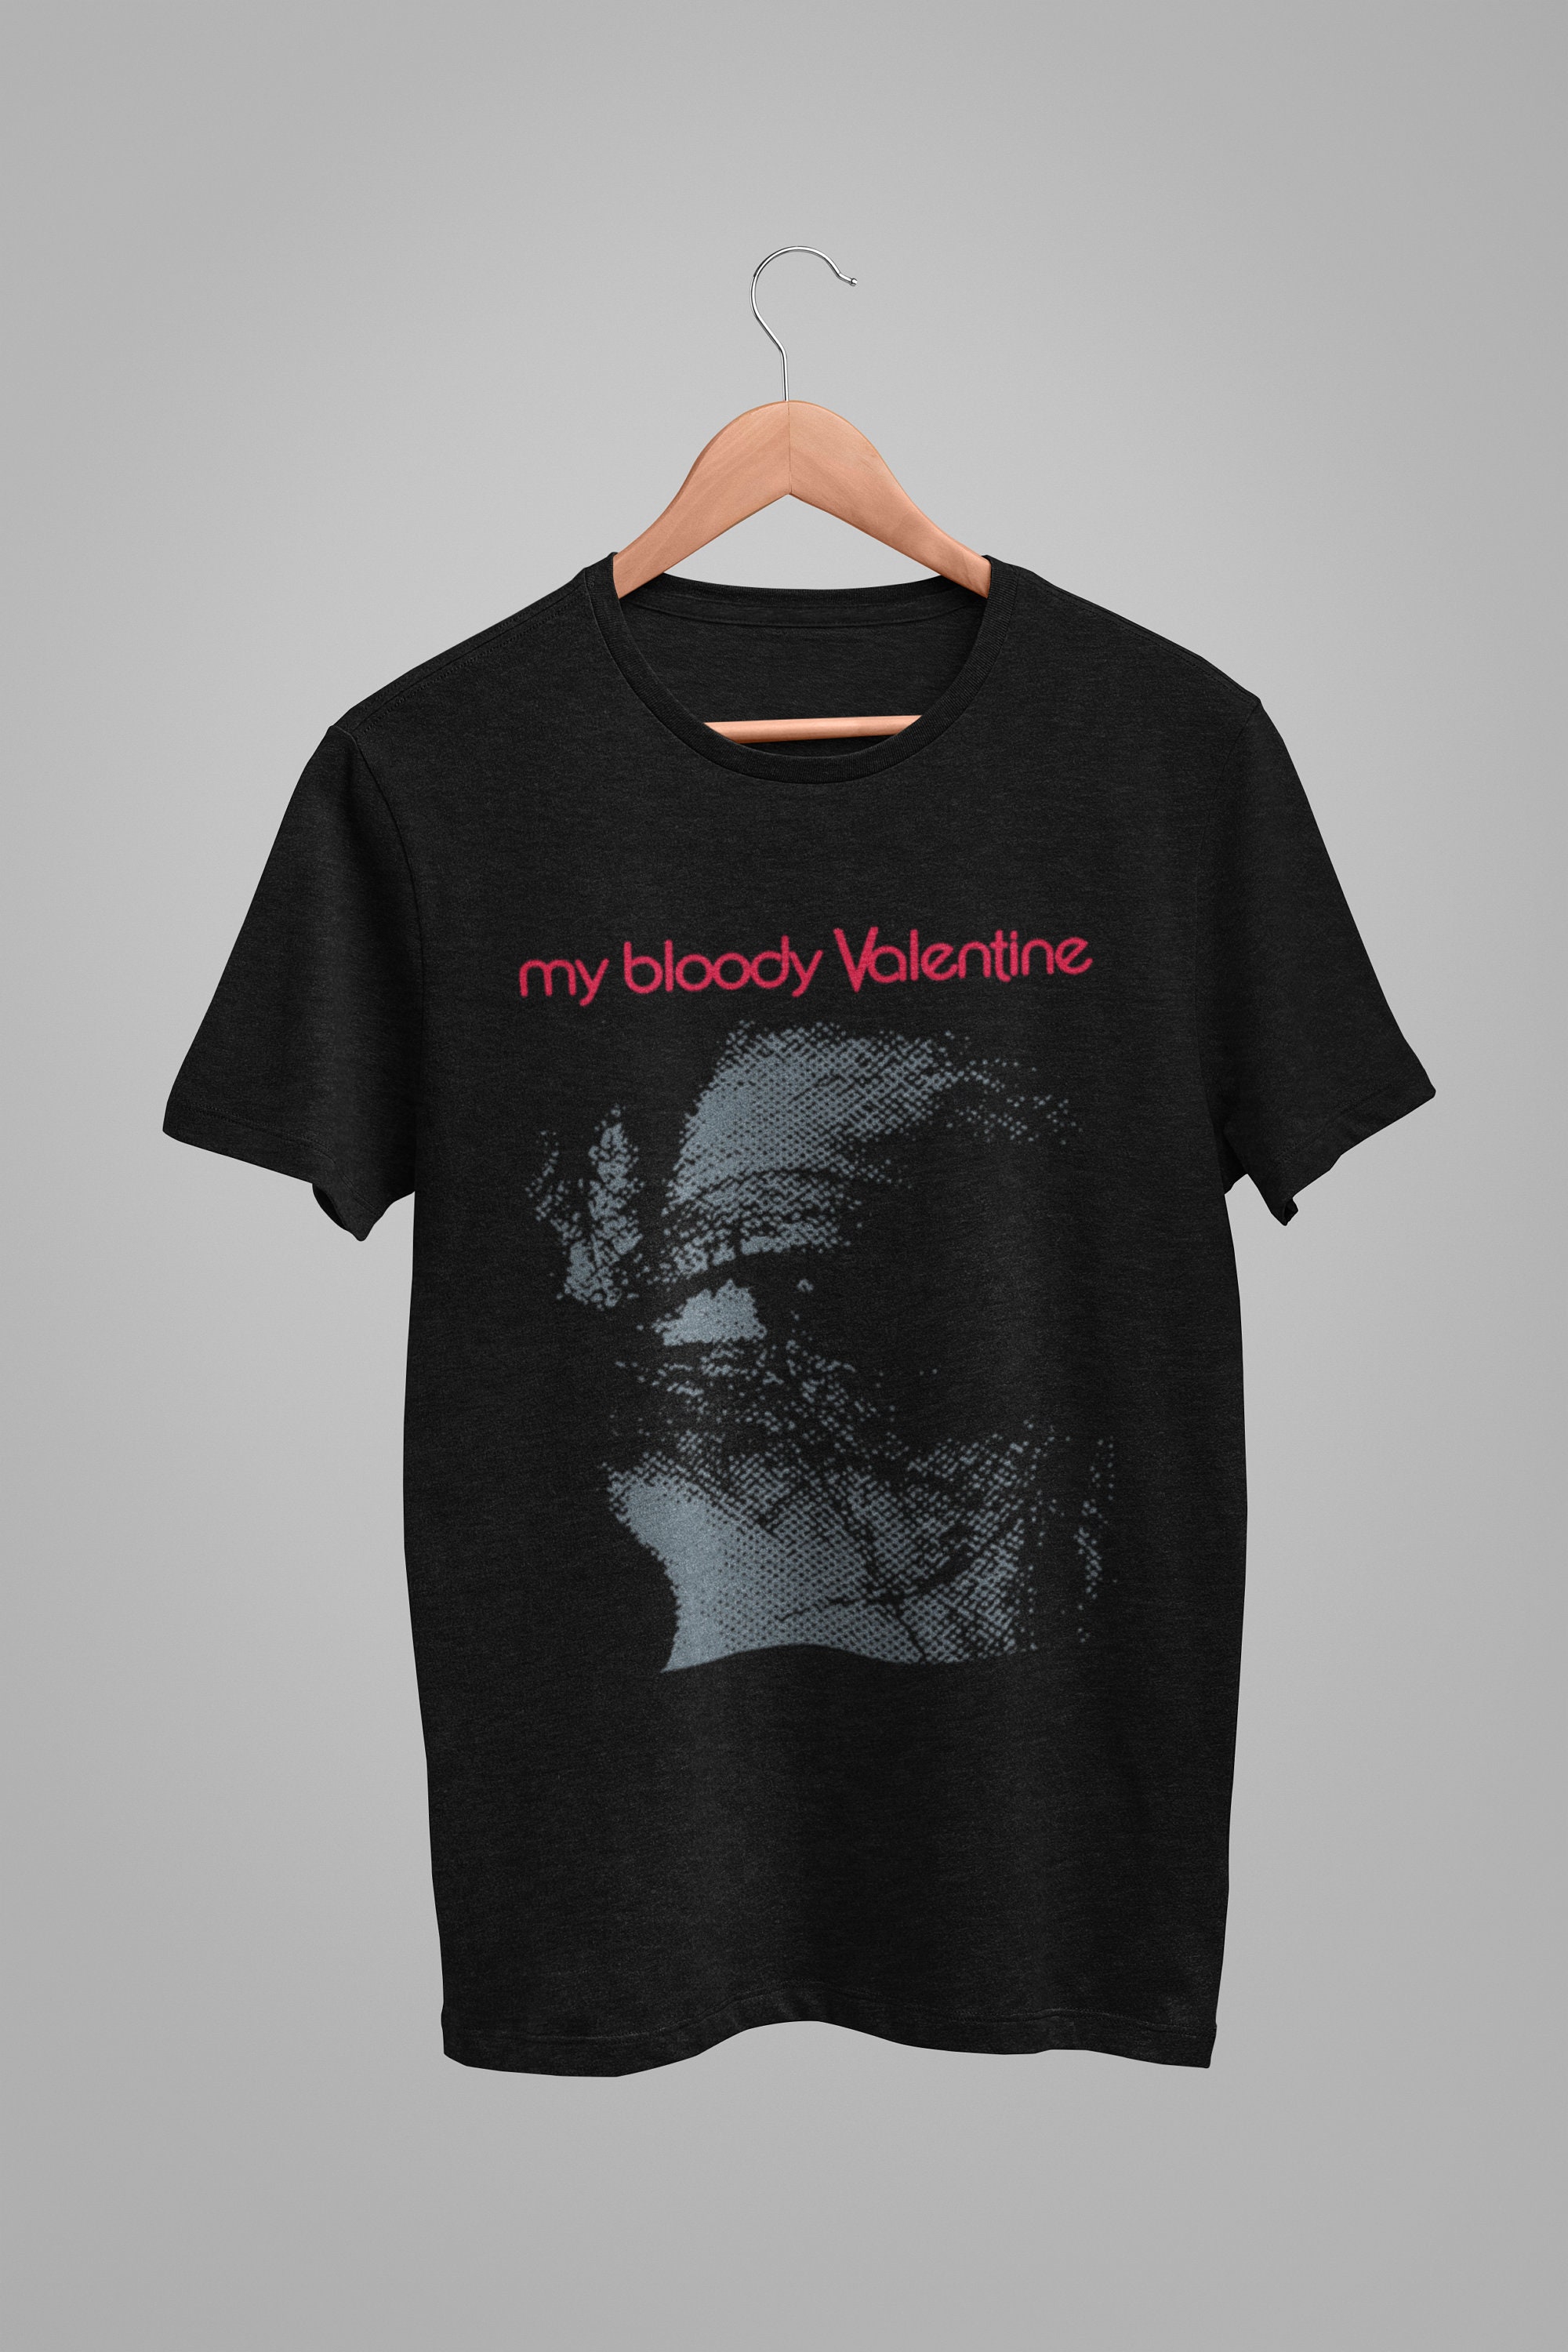 My-bloody-valentine T-shirt, My Bloody Valentine Vintage Unisex